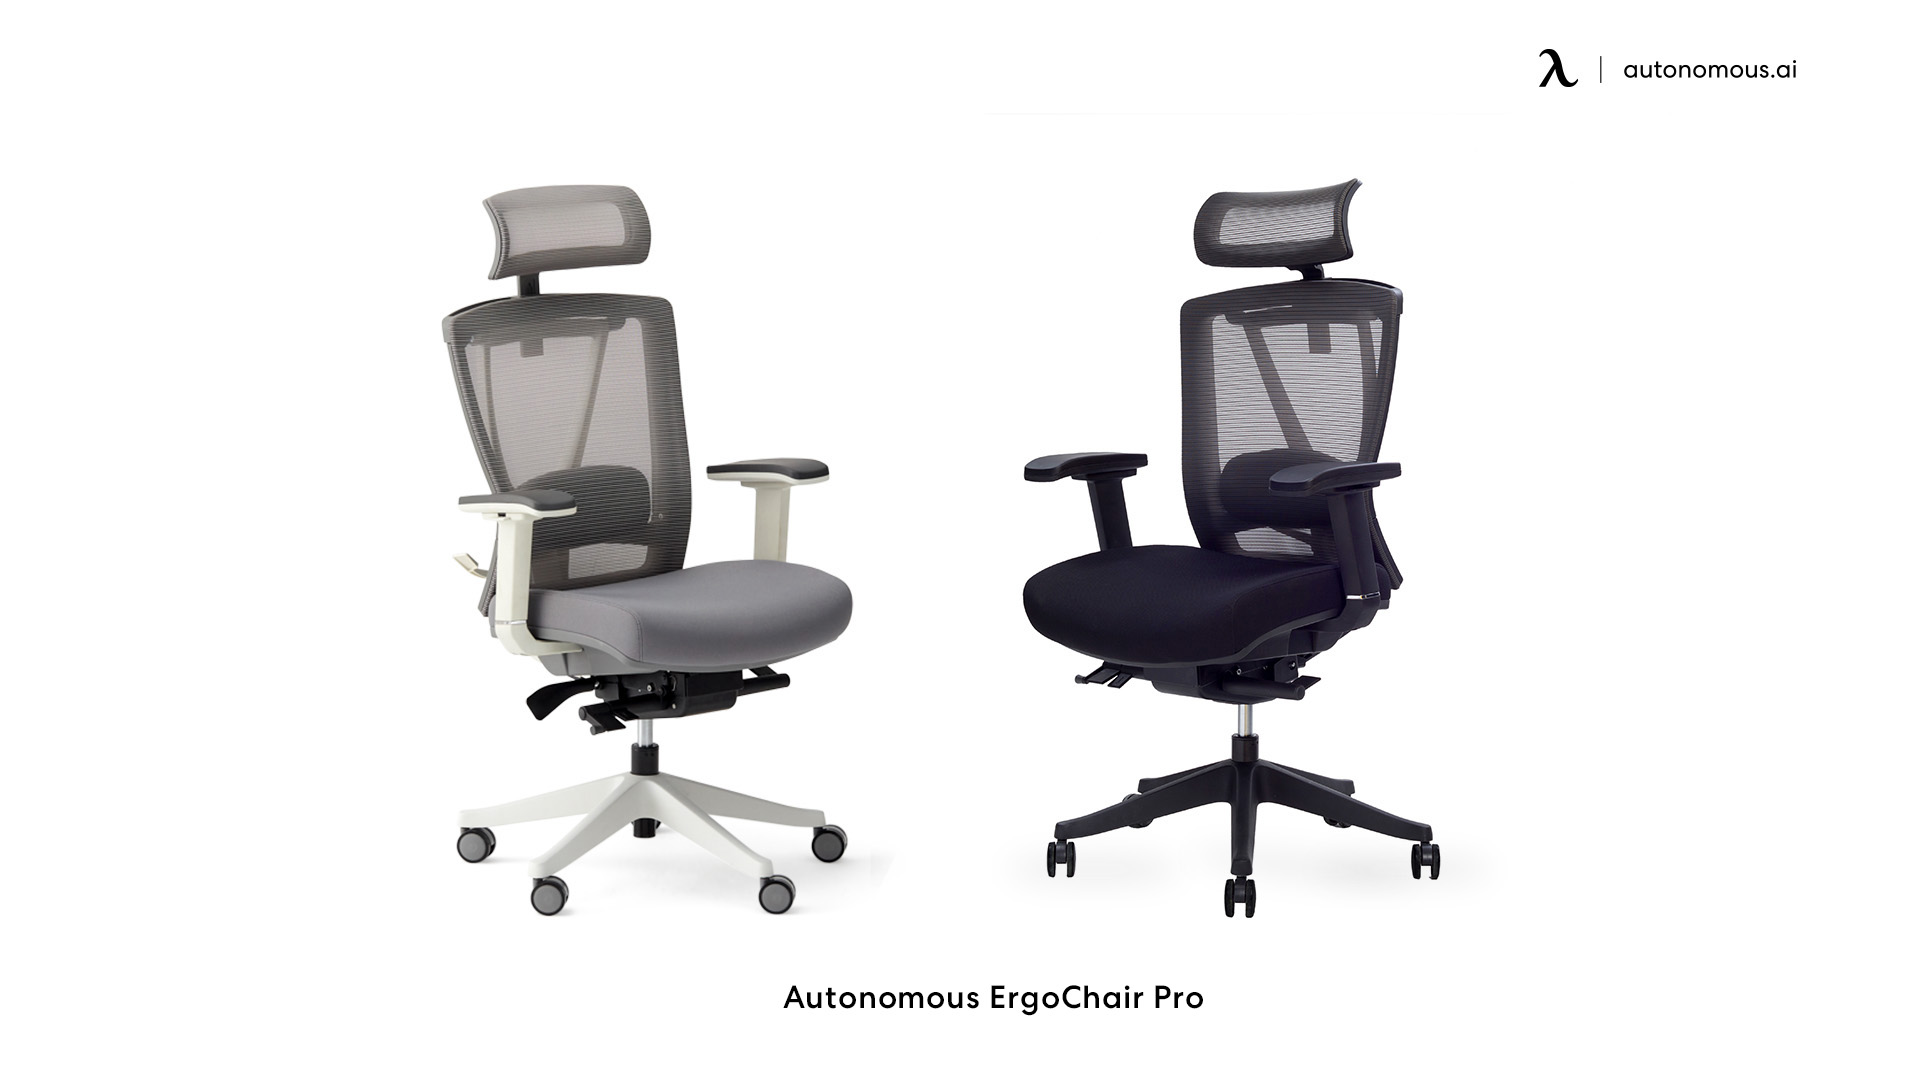 ErgoChair Pro High back executive chair with headrest